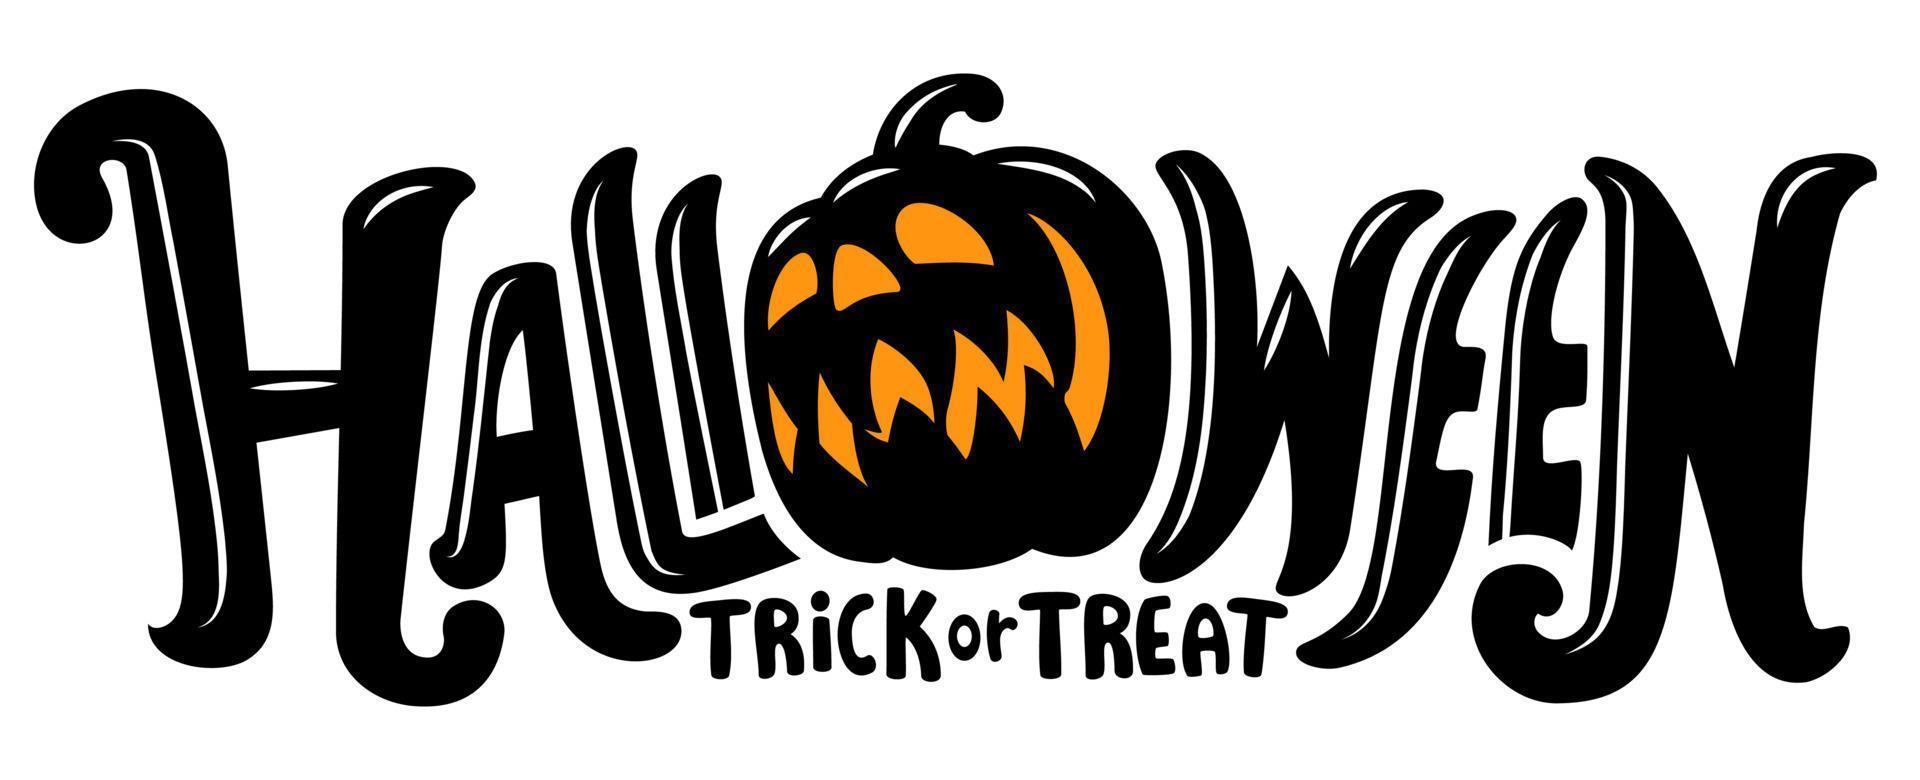 glückliches Halloween-Textdesign, Vektor